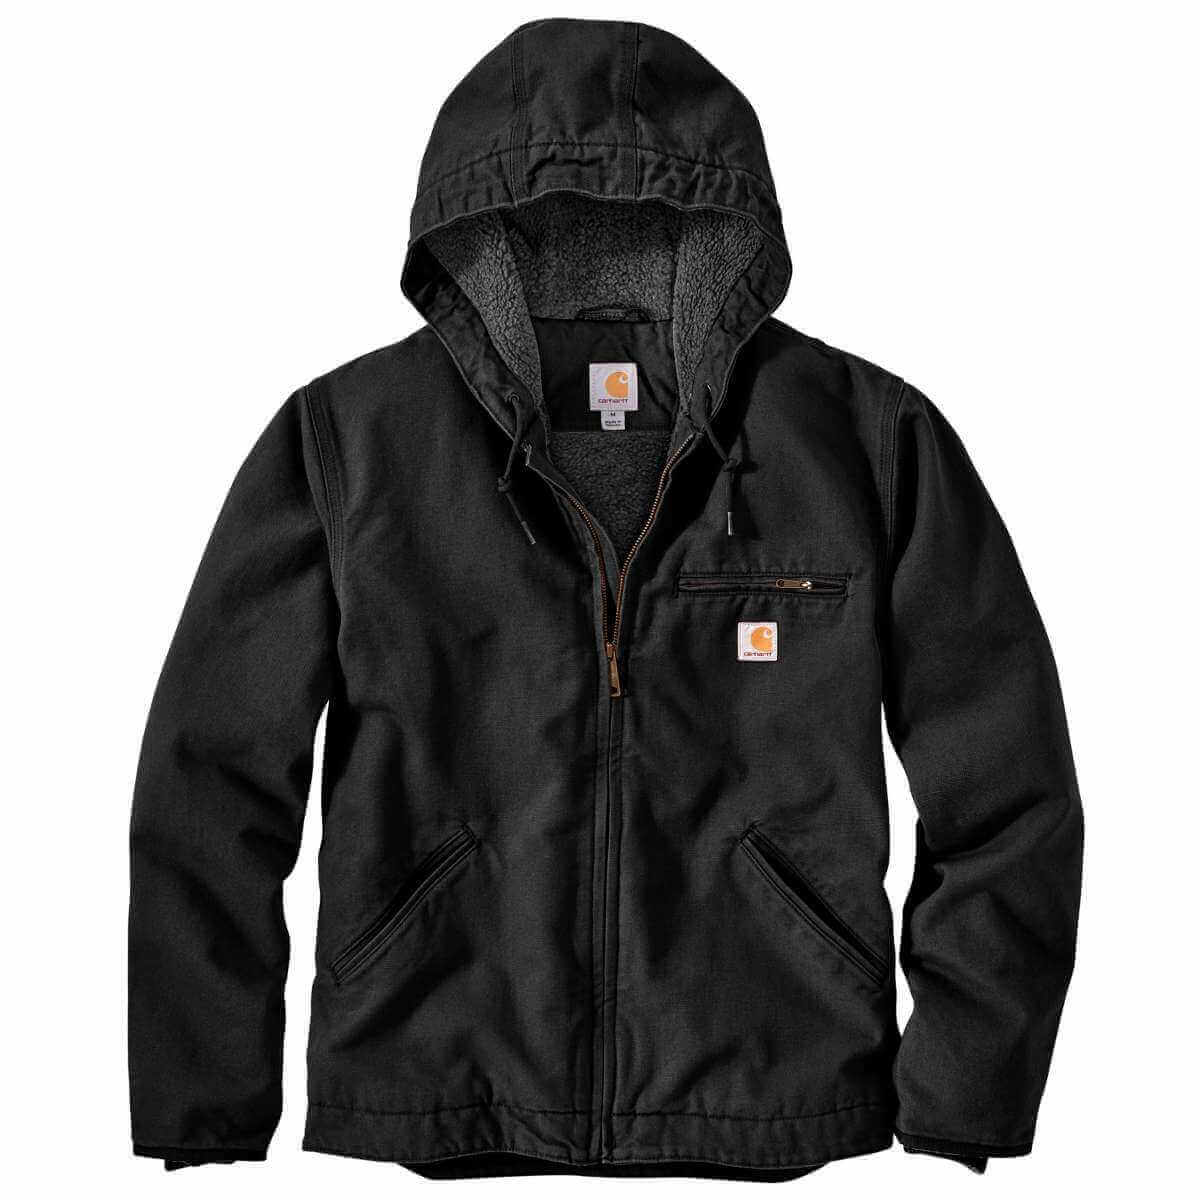 Carhartt Men's Washed Duck Sherpa Lined Jacket BLK Black